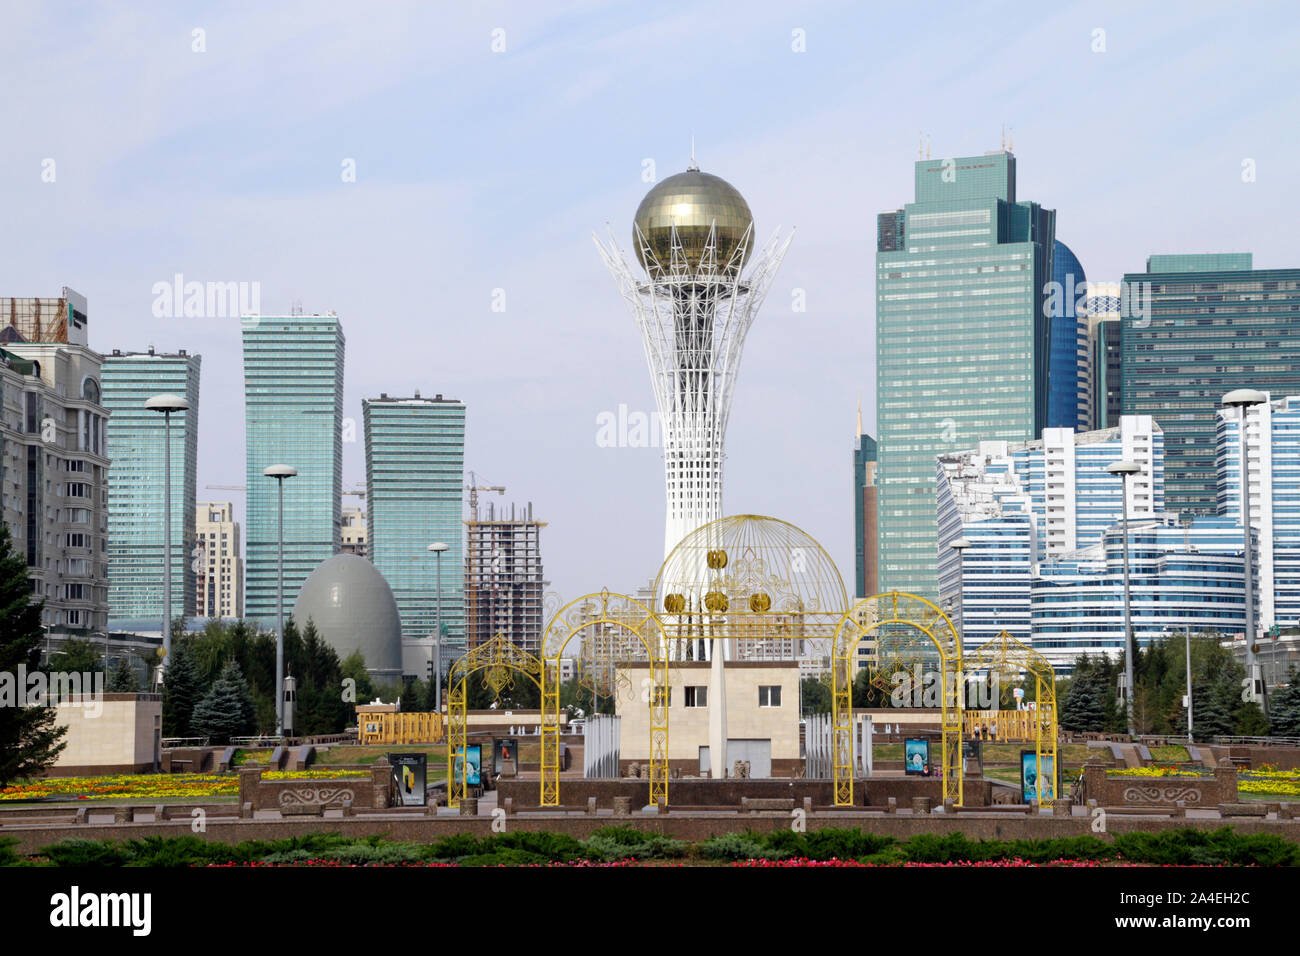 Nur-Sultan, Kazakhstan - August 25, 2019: The cityscpae of Nur-Sultan, Kazakhstan, on a sunny day with the famous Bayterek Tower in its center. Stock Photo